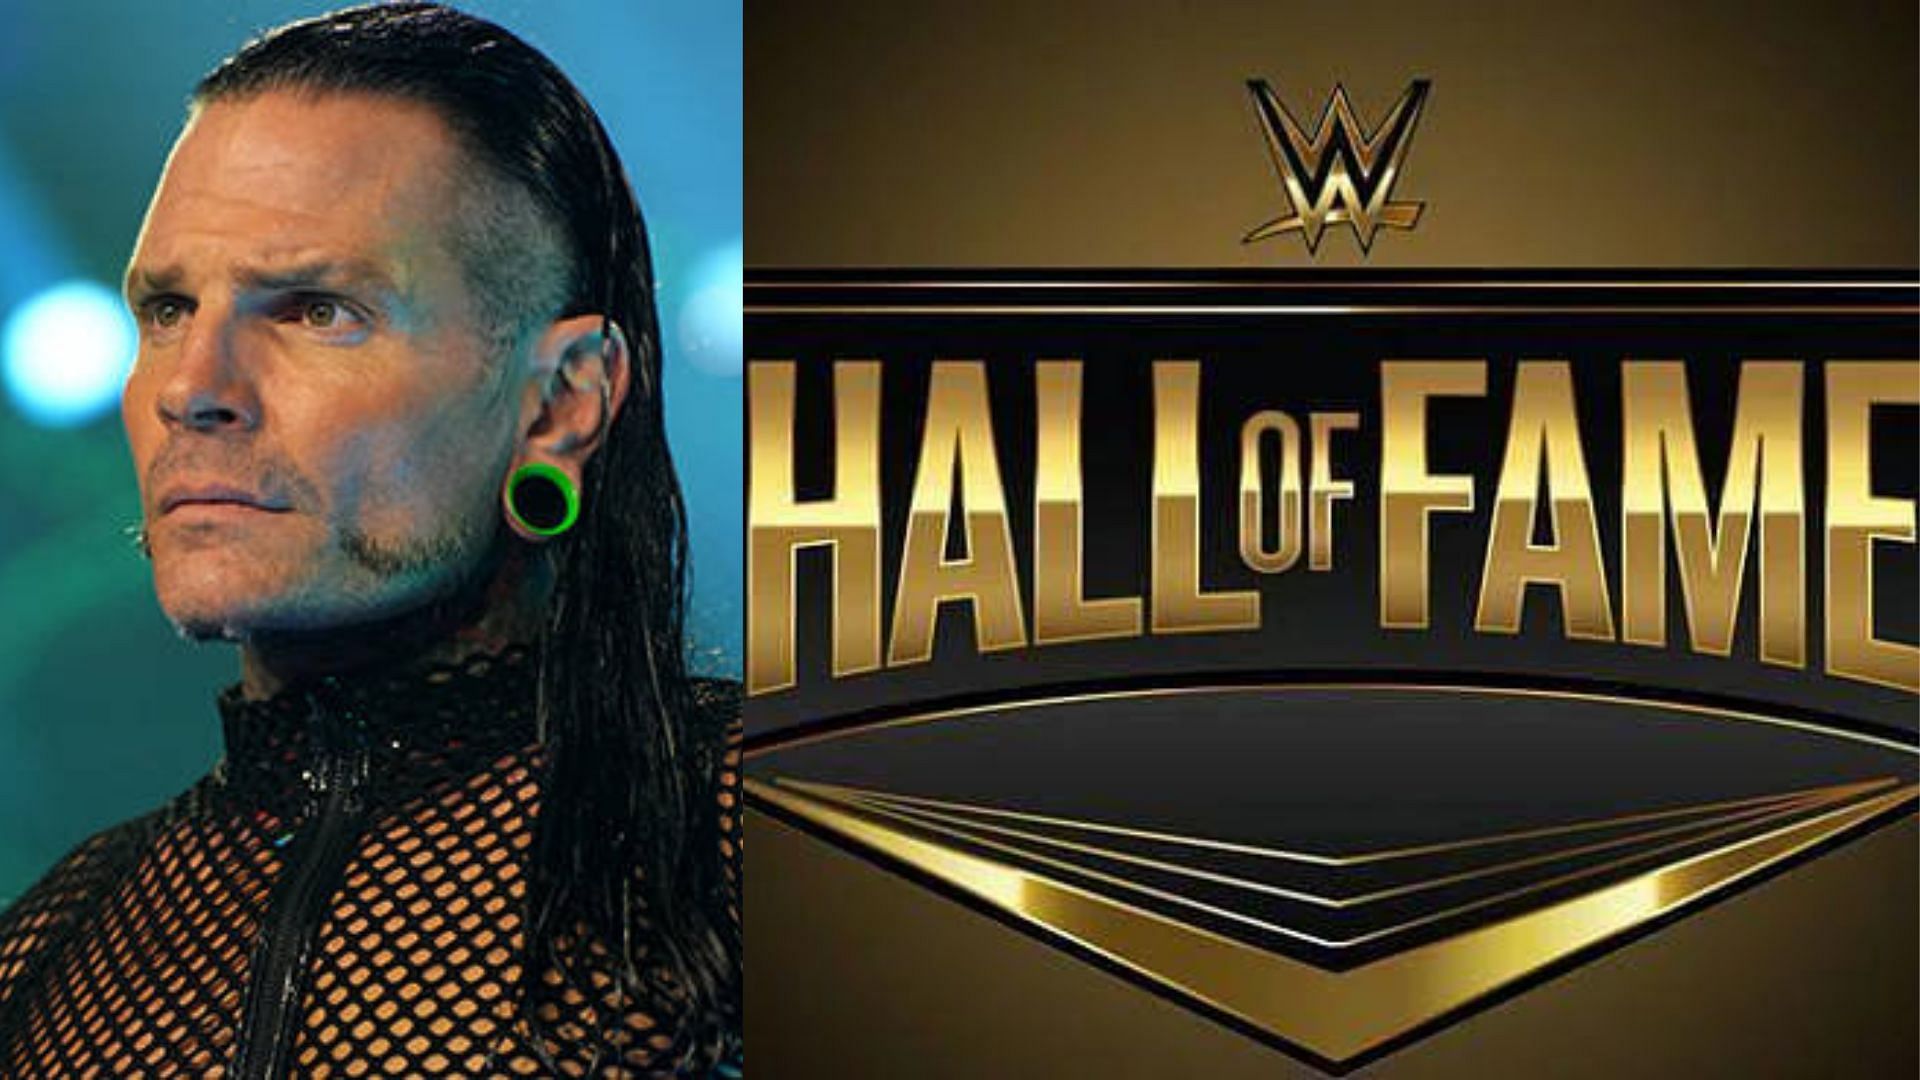 Jeff Hardy (left); Hall of Famer logo (right)